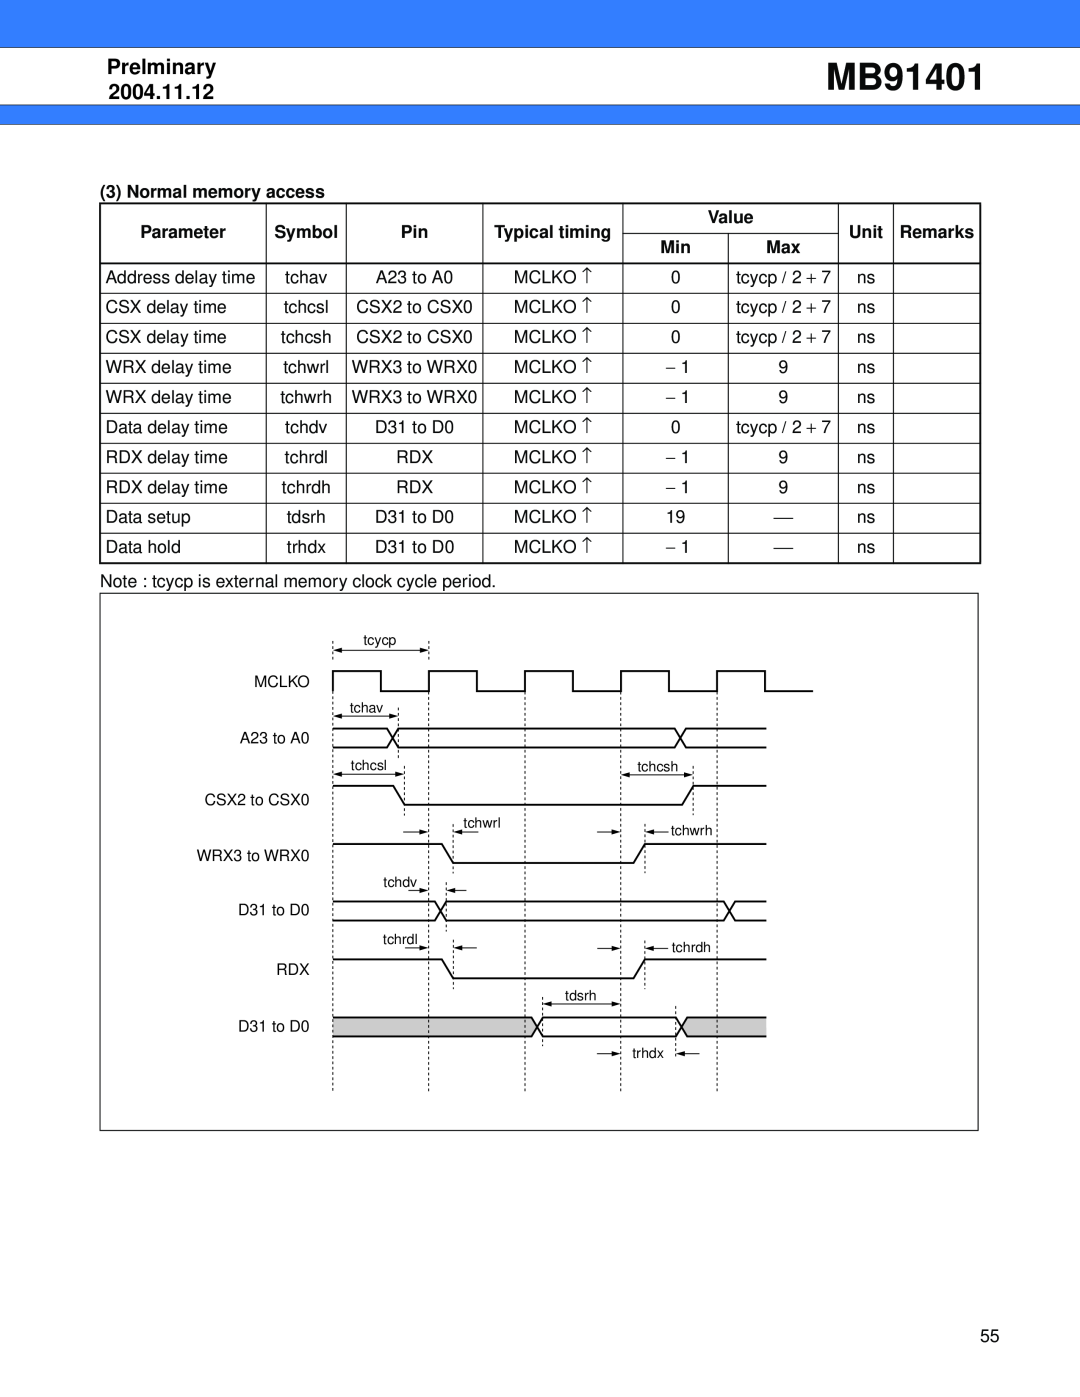 Fujitsu MB91401 Normal memory access, Typical timing, Prelminary, 2004.11.12, Parameter, Symbol, Value, Unit, Remarks 